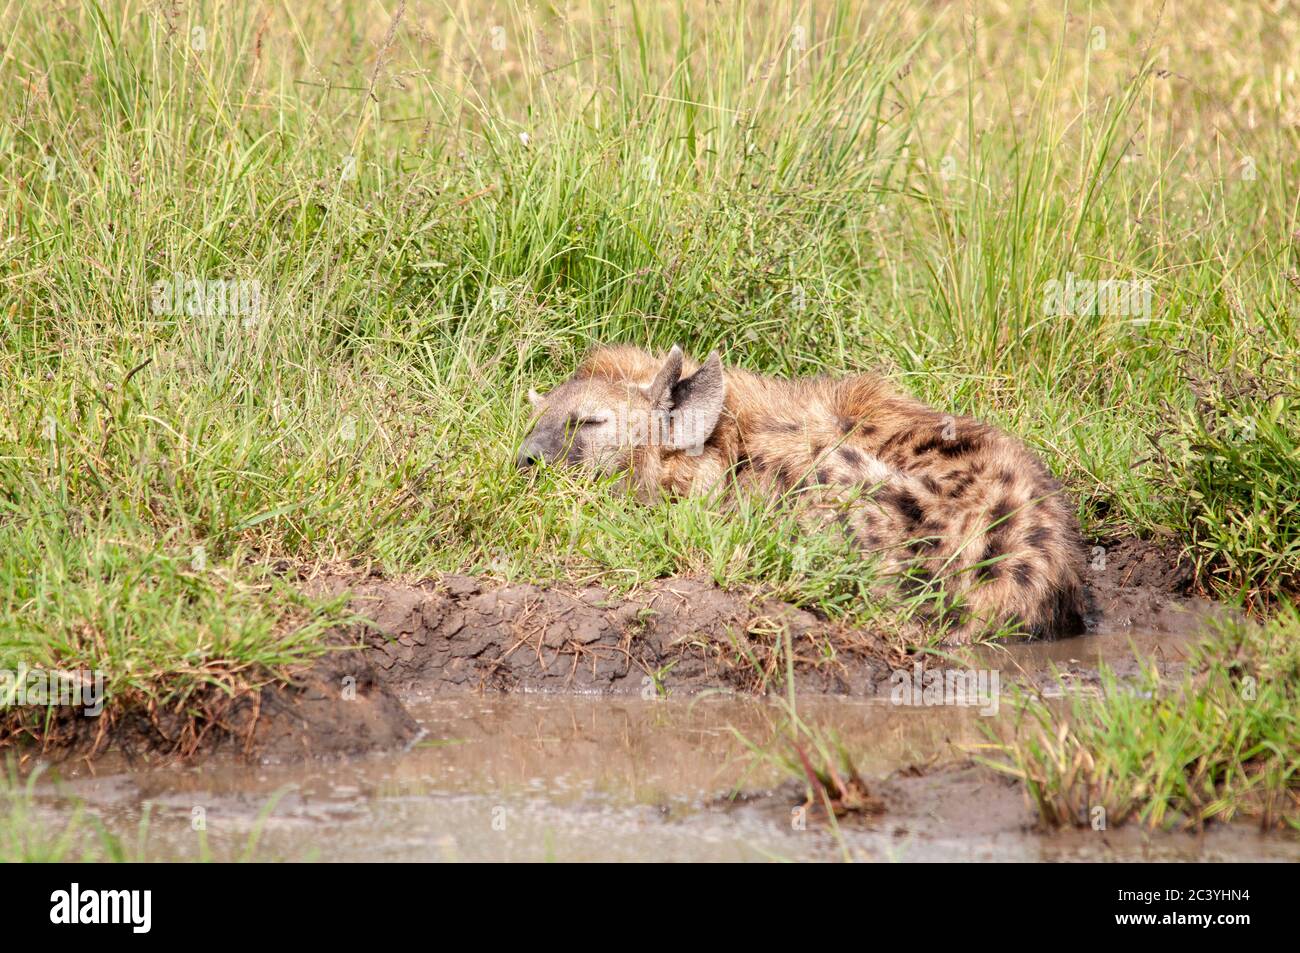 Adult spotted hyena, Crocuta crocuta (Hyaenidae), sleeping in the grass in Masai Mara National Reserve. Kenya. Africa. Stock Photo